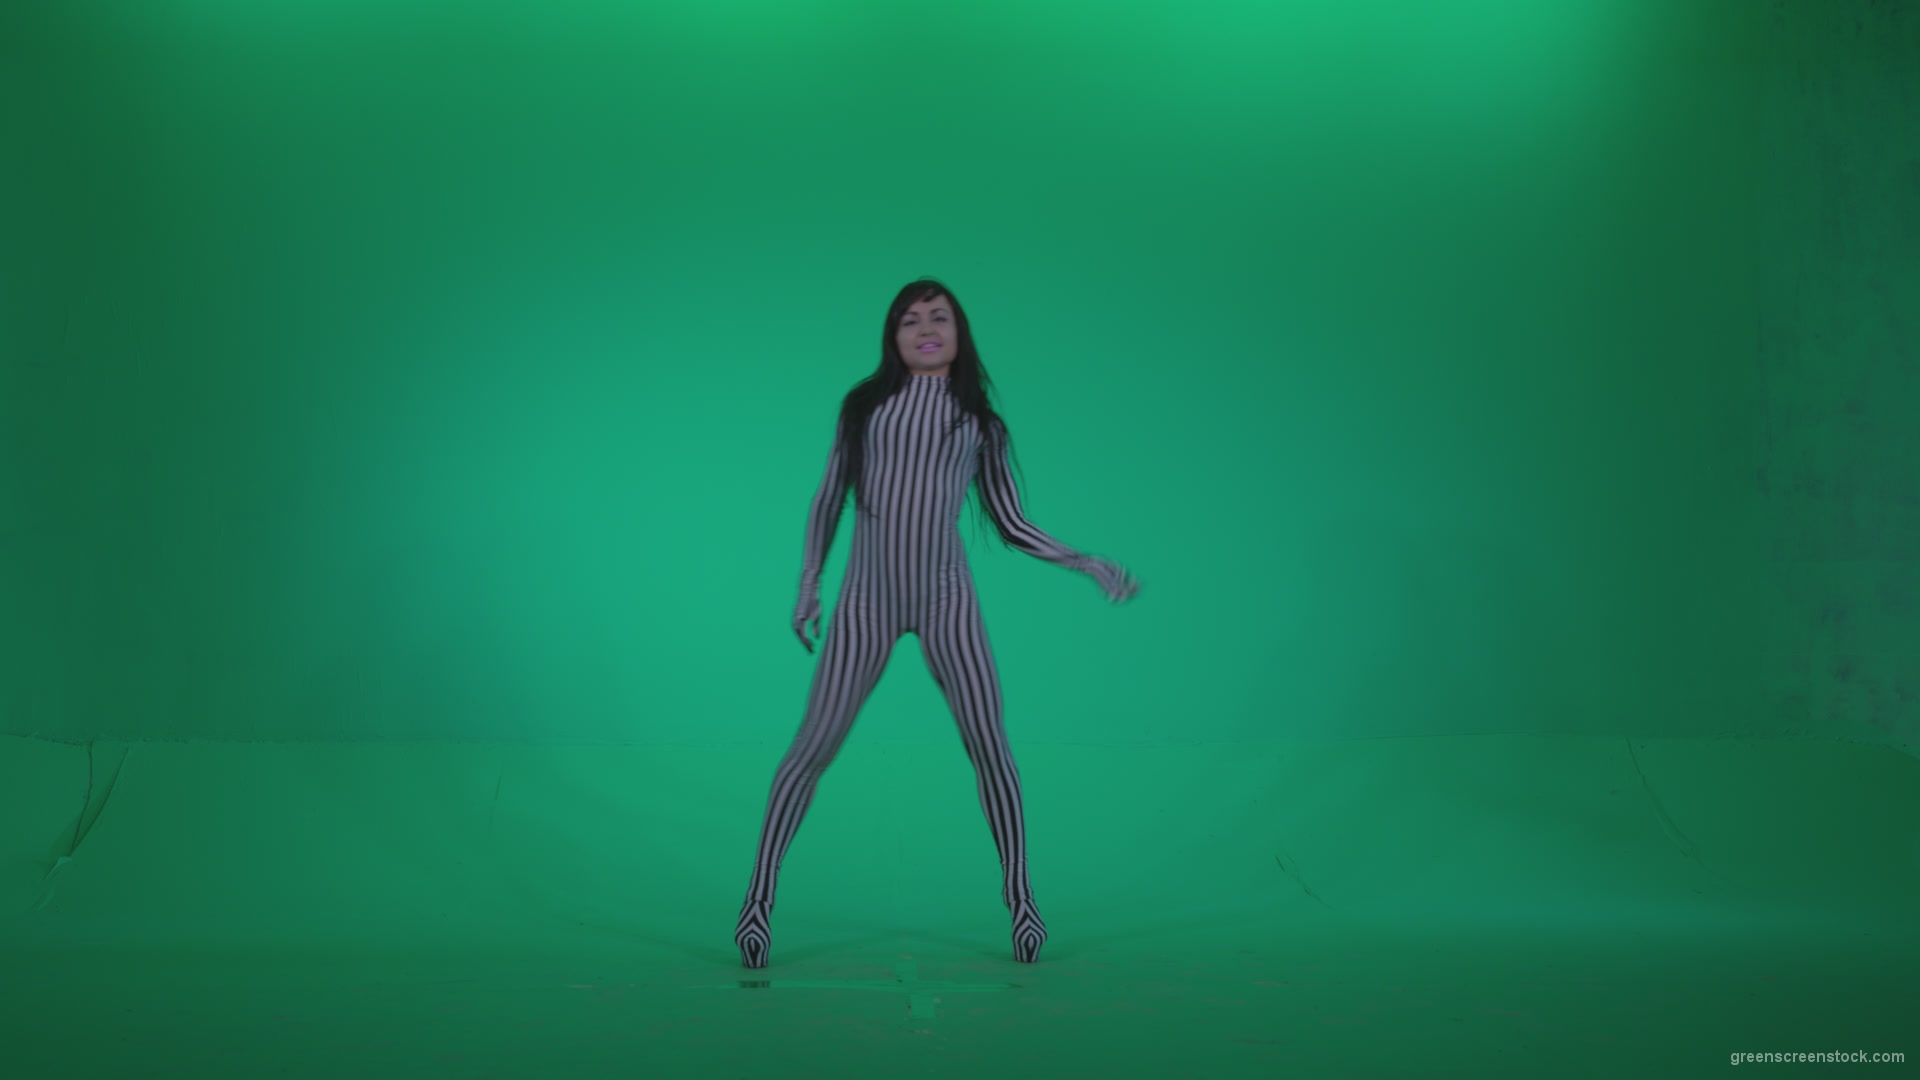 Go-go-Dancer-White-Stripes-s4-Green-Screen-Video-Footage_001 Green Screen Stock